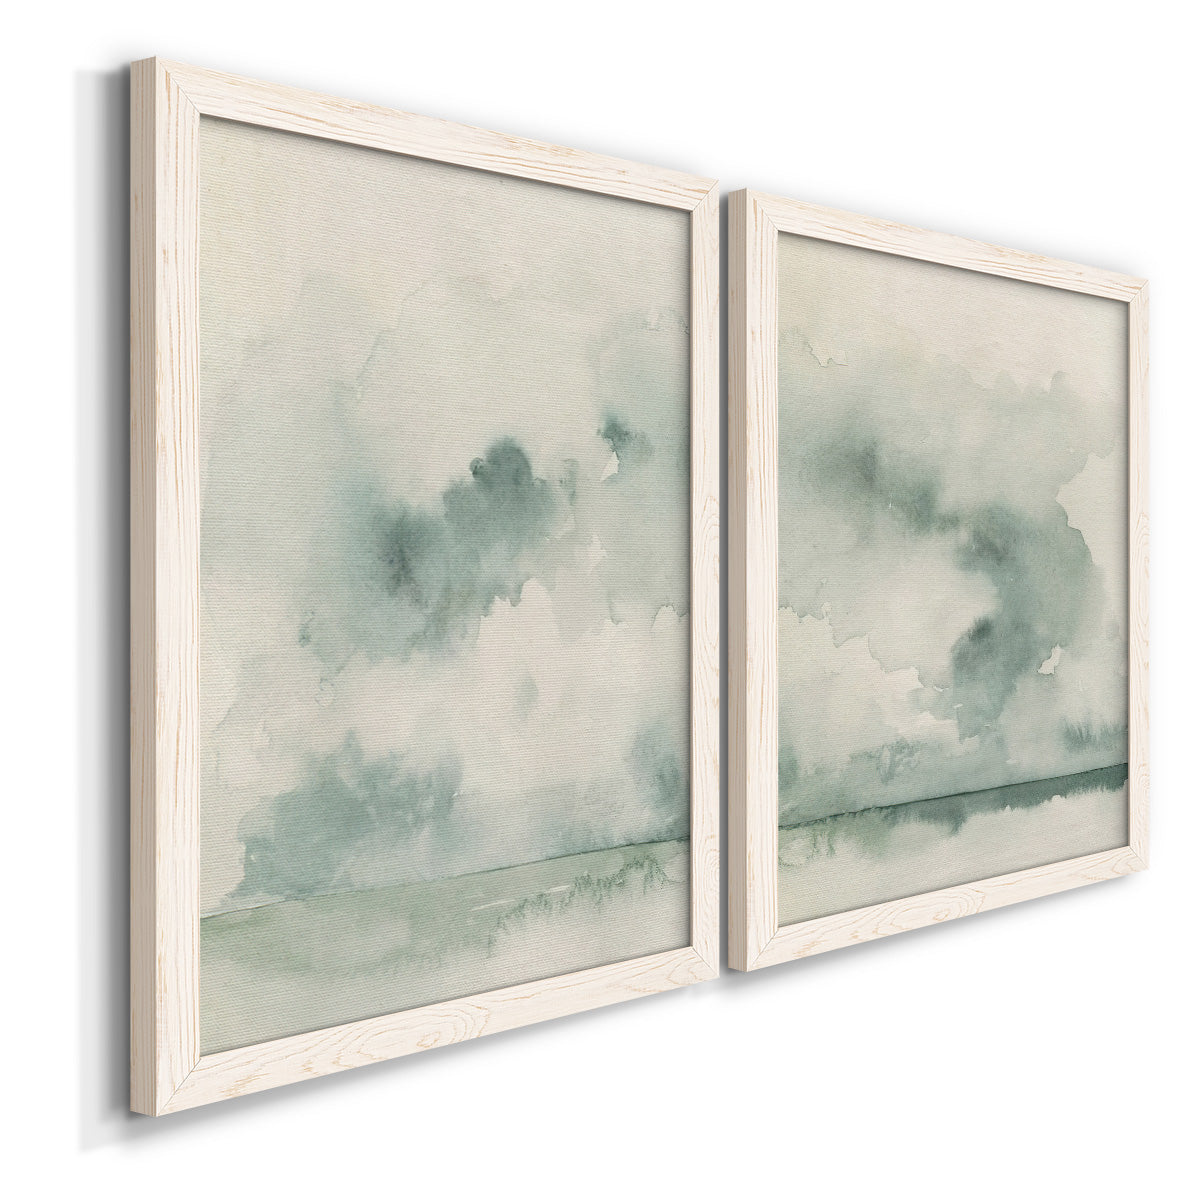 Ocean Impression I - Premium Framed Canvas 2 Piece Set - Ready to Hang